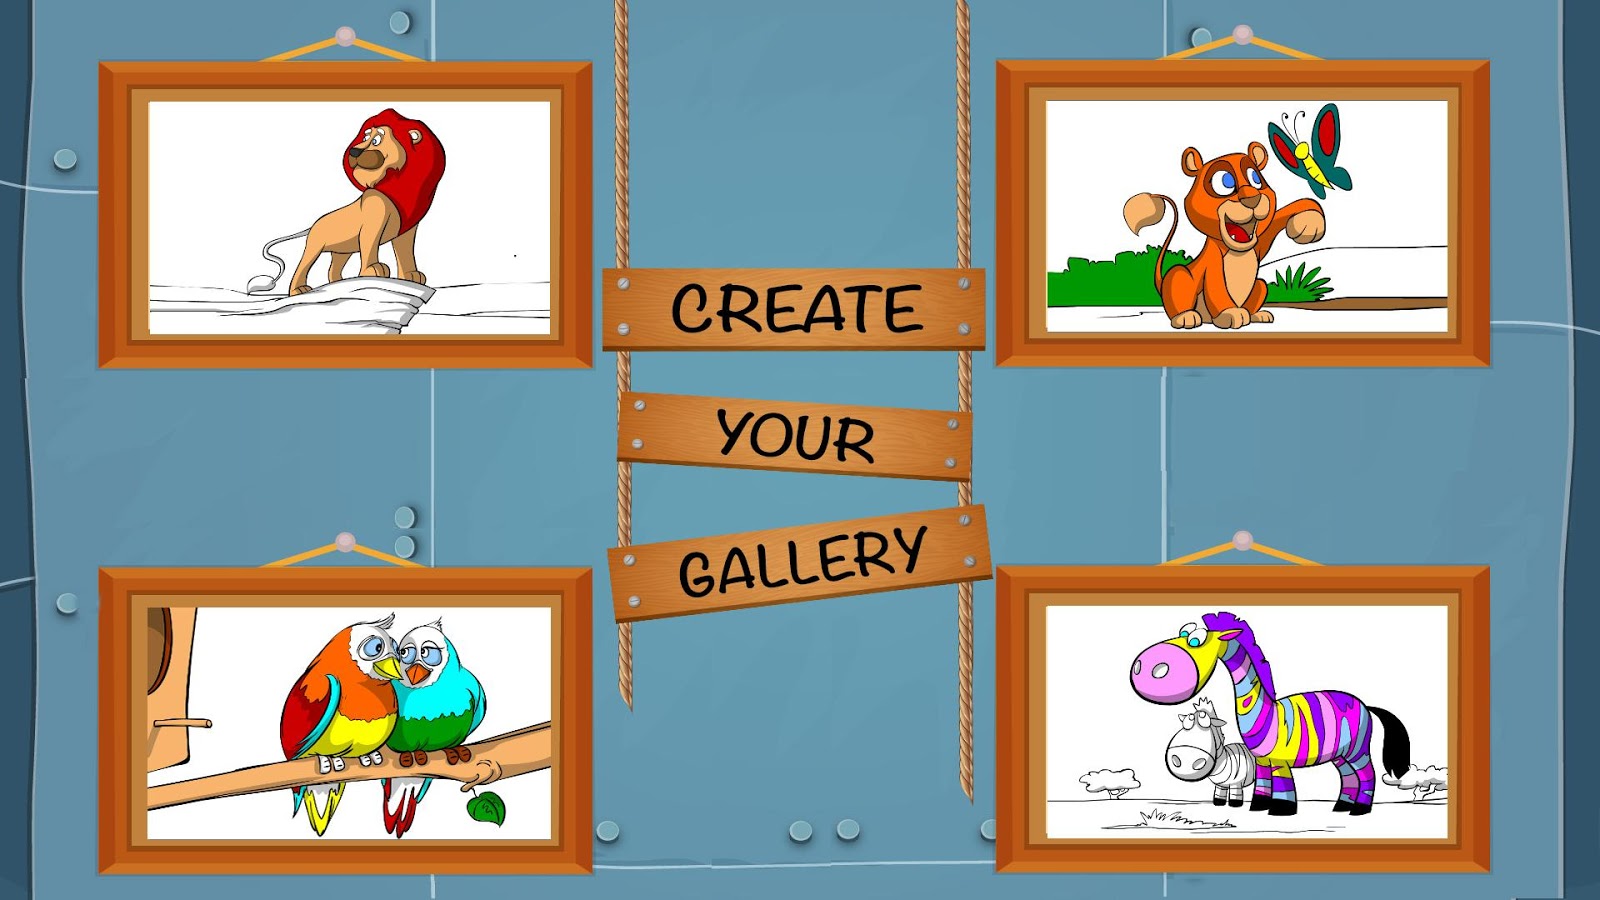 PicsArt Kids - Learn to Draw